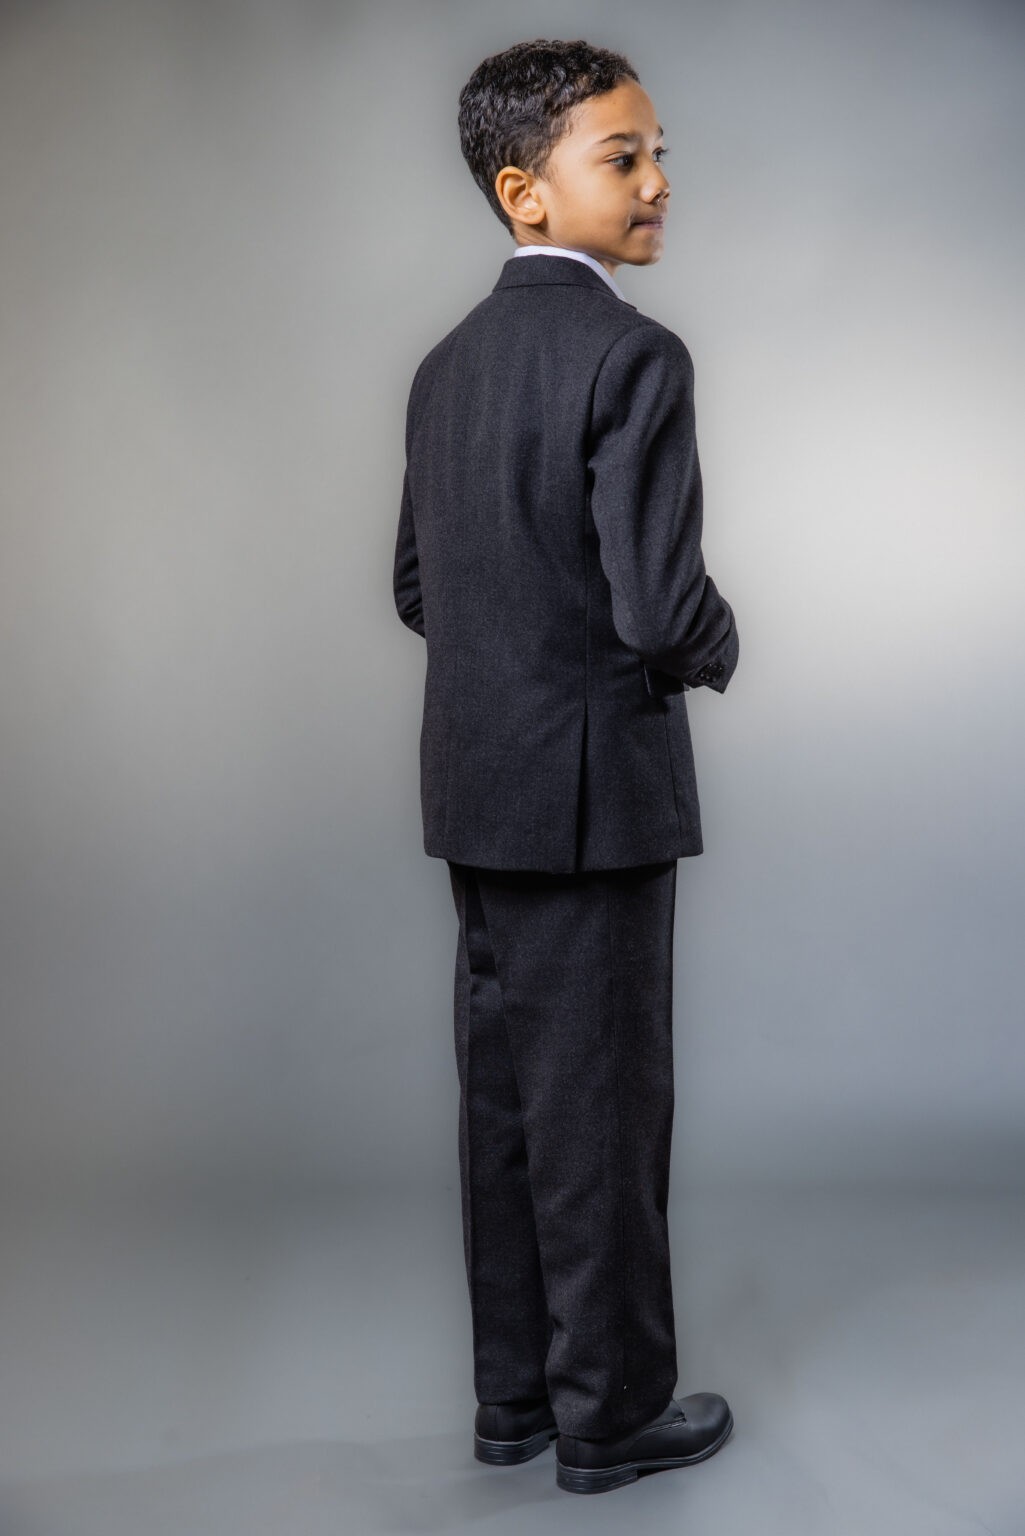 Boys Husky Tweed Tailored Fit Grey Suit - ADAM